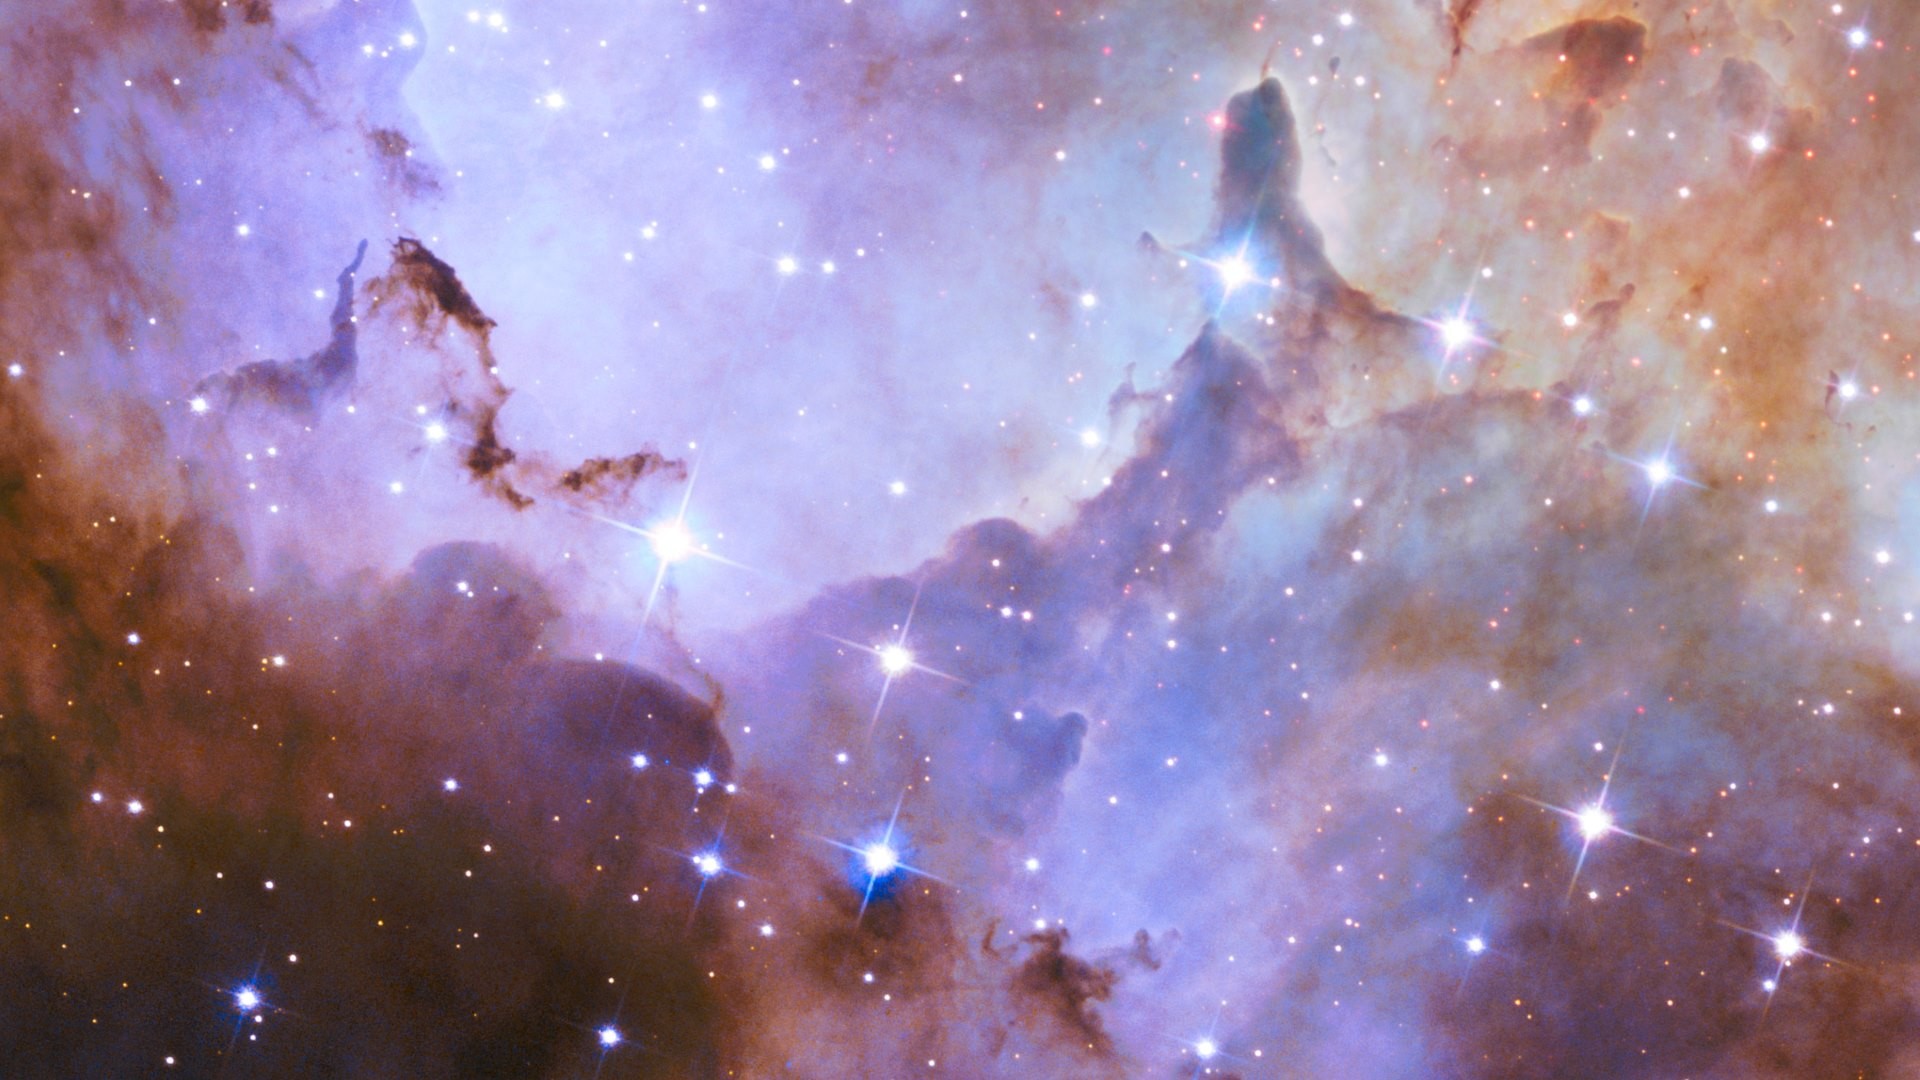 Wallpaper 4: Hubble Space Telescope Celebrates 25 Years